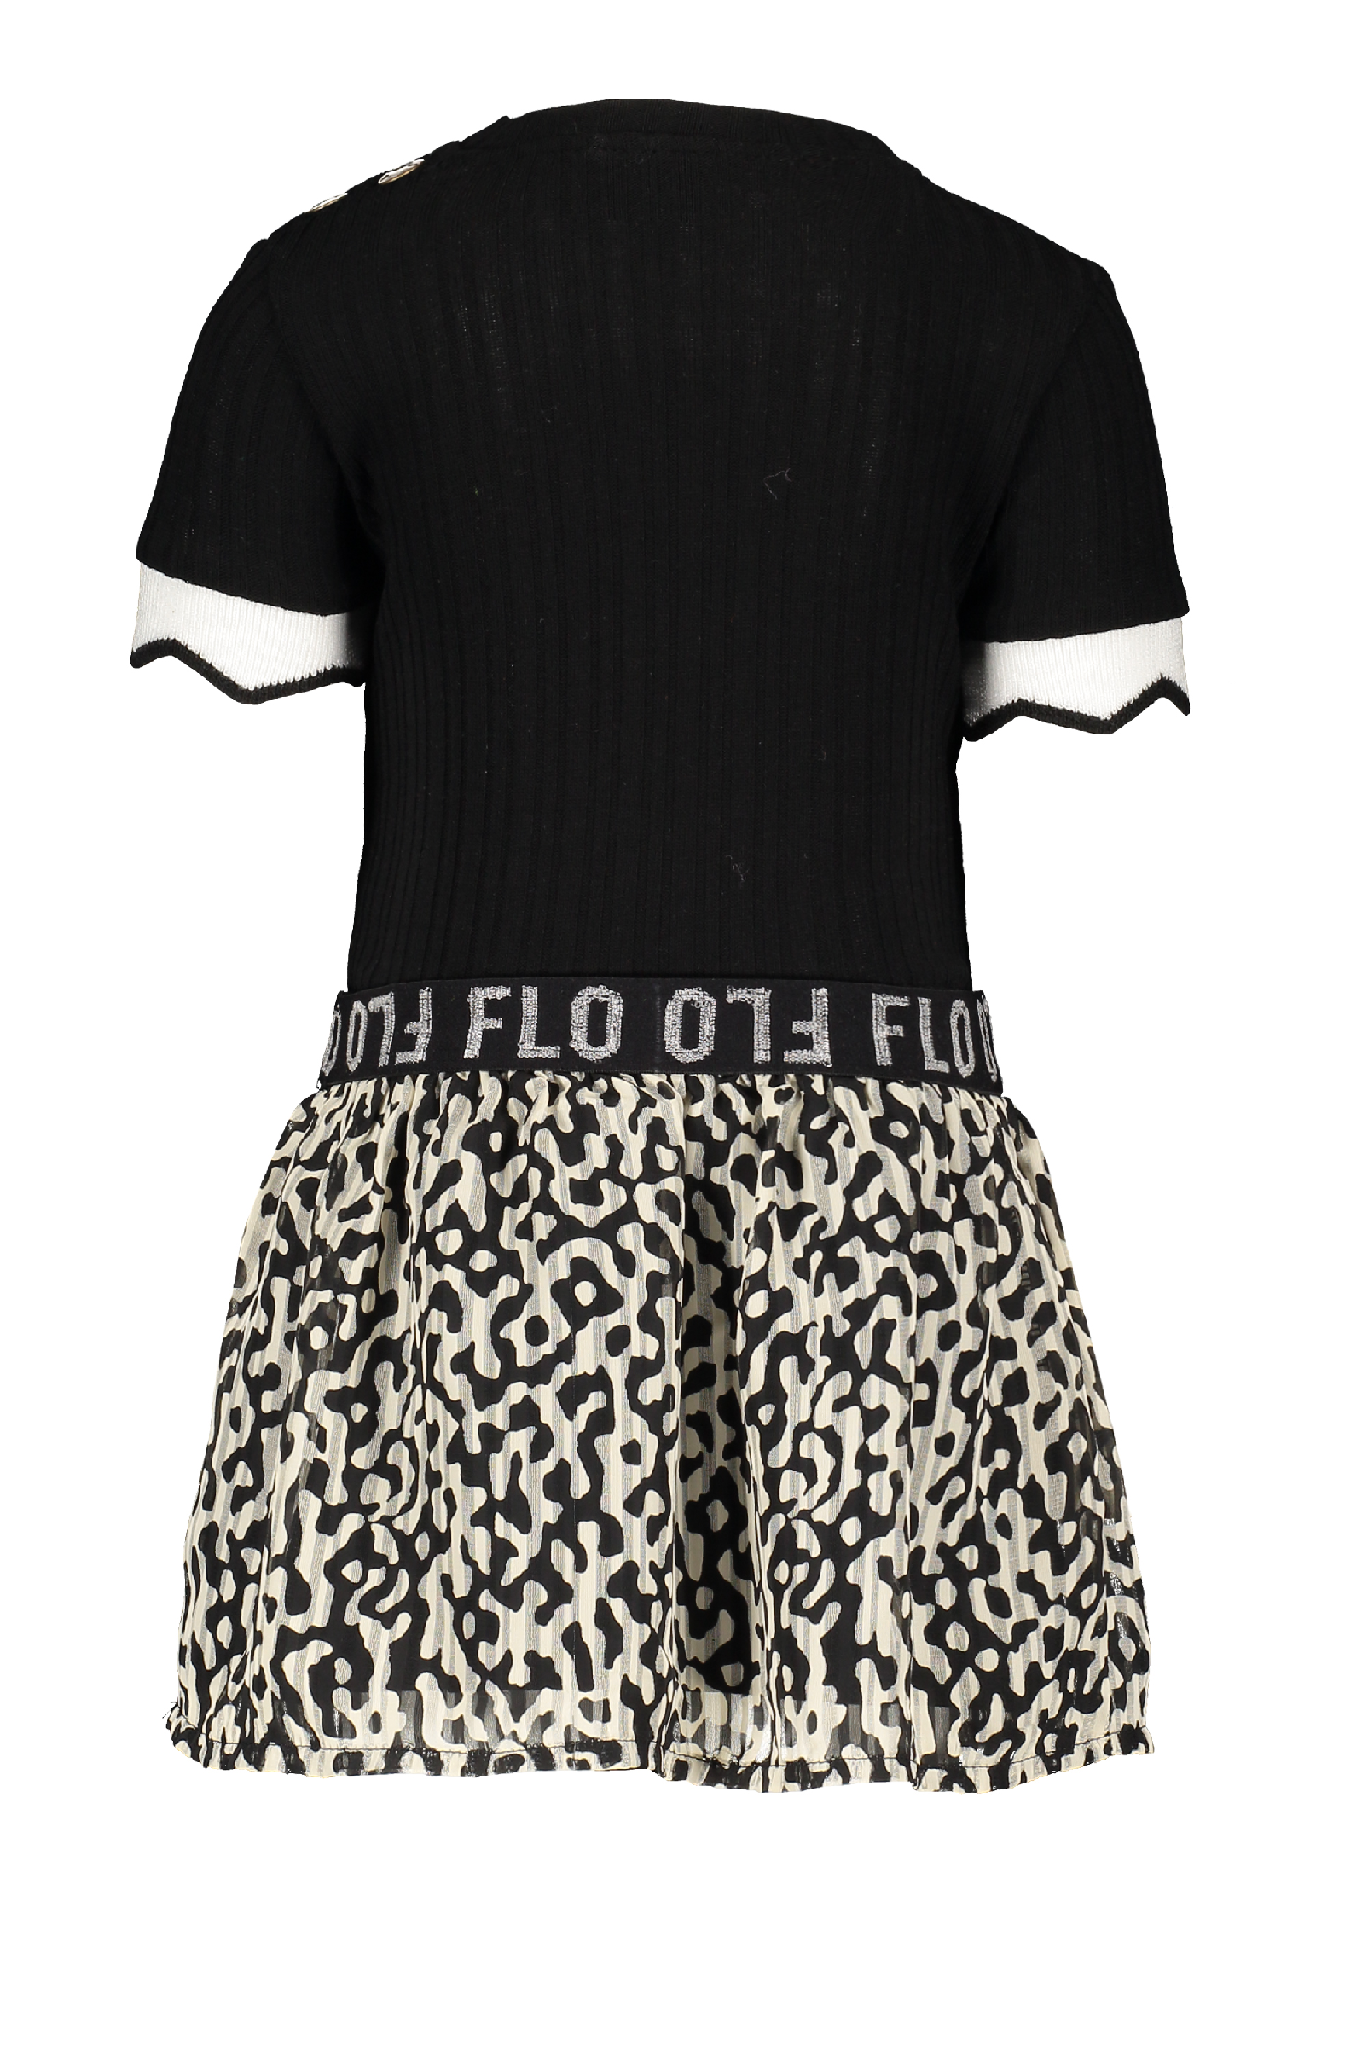 Meisjes Flo baby girls ss rib dress with fancy plisse skirt van Flo in de kleur Graphic in maat 92.